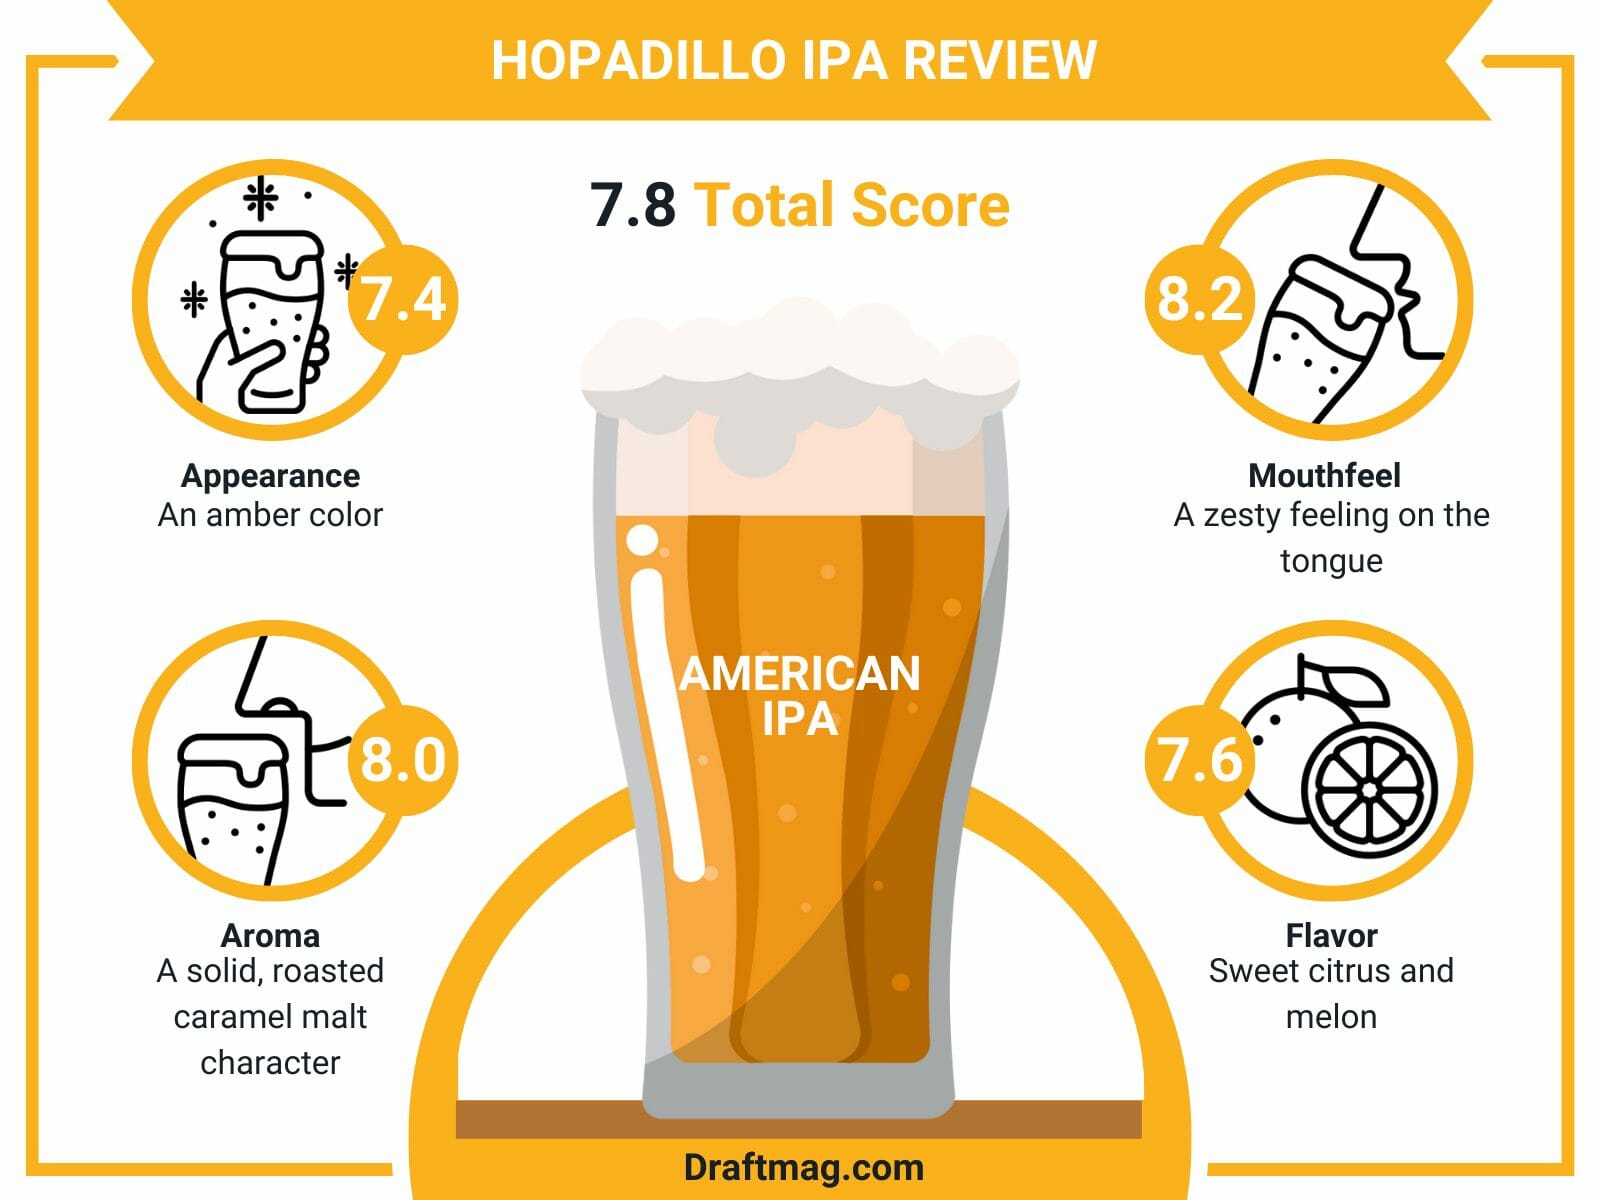 Hopadillo ipa review infographic